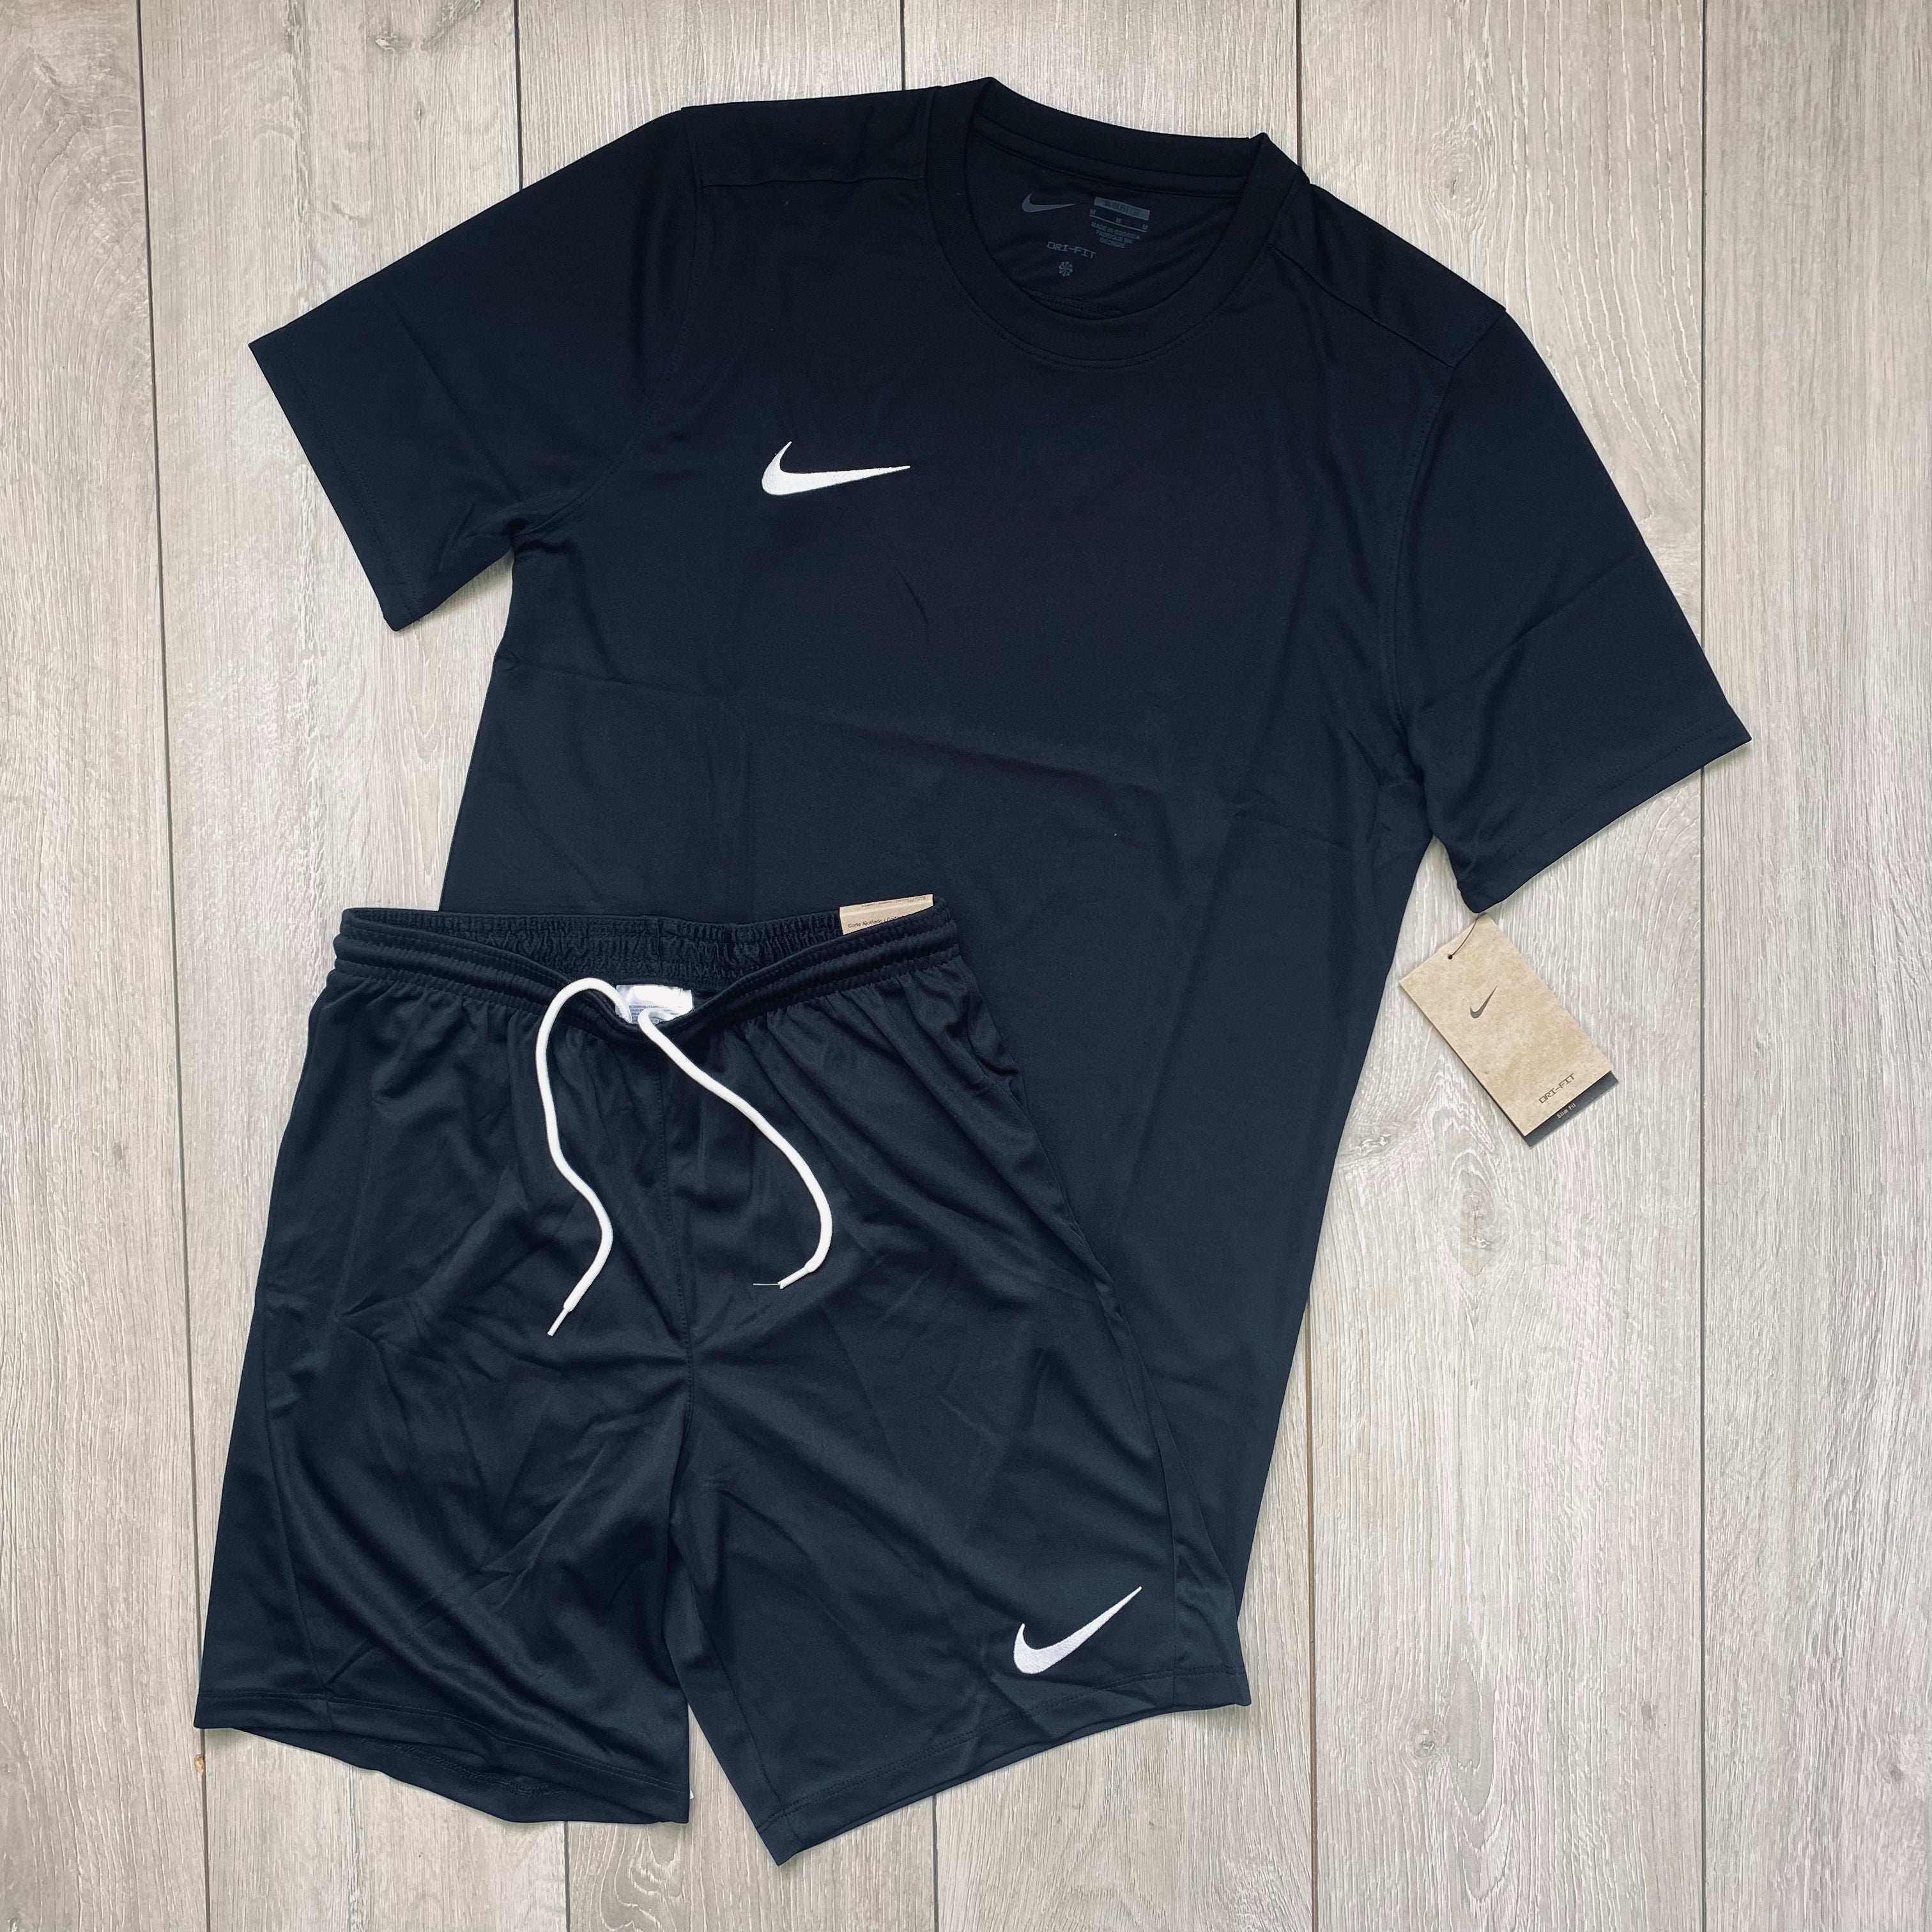 Nike Dri-Fit Set - Black